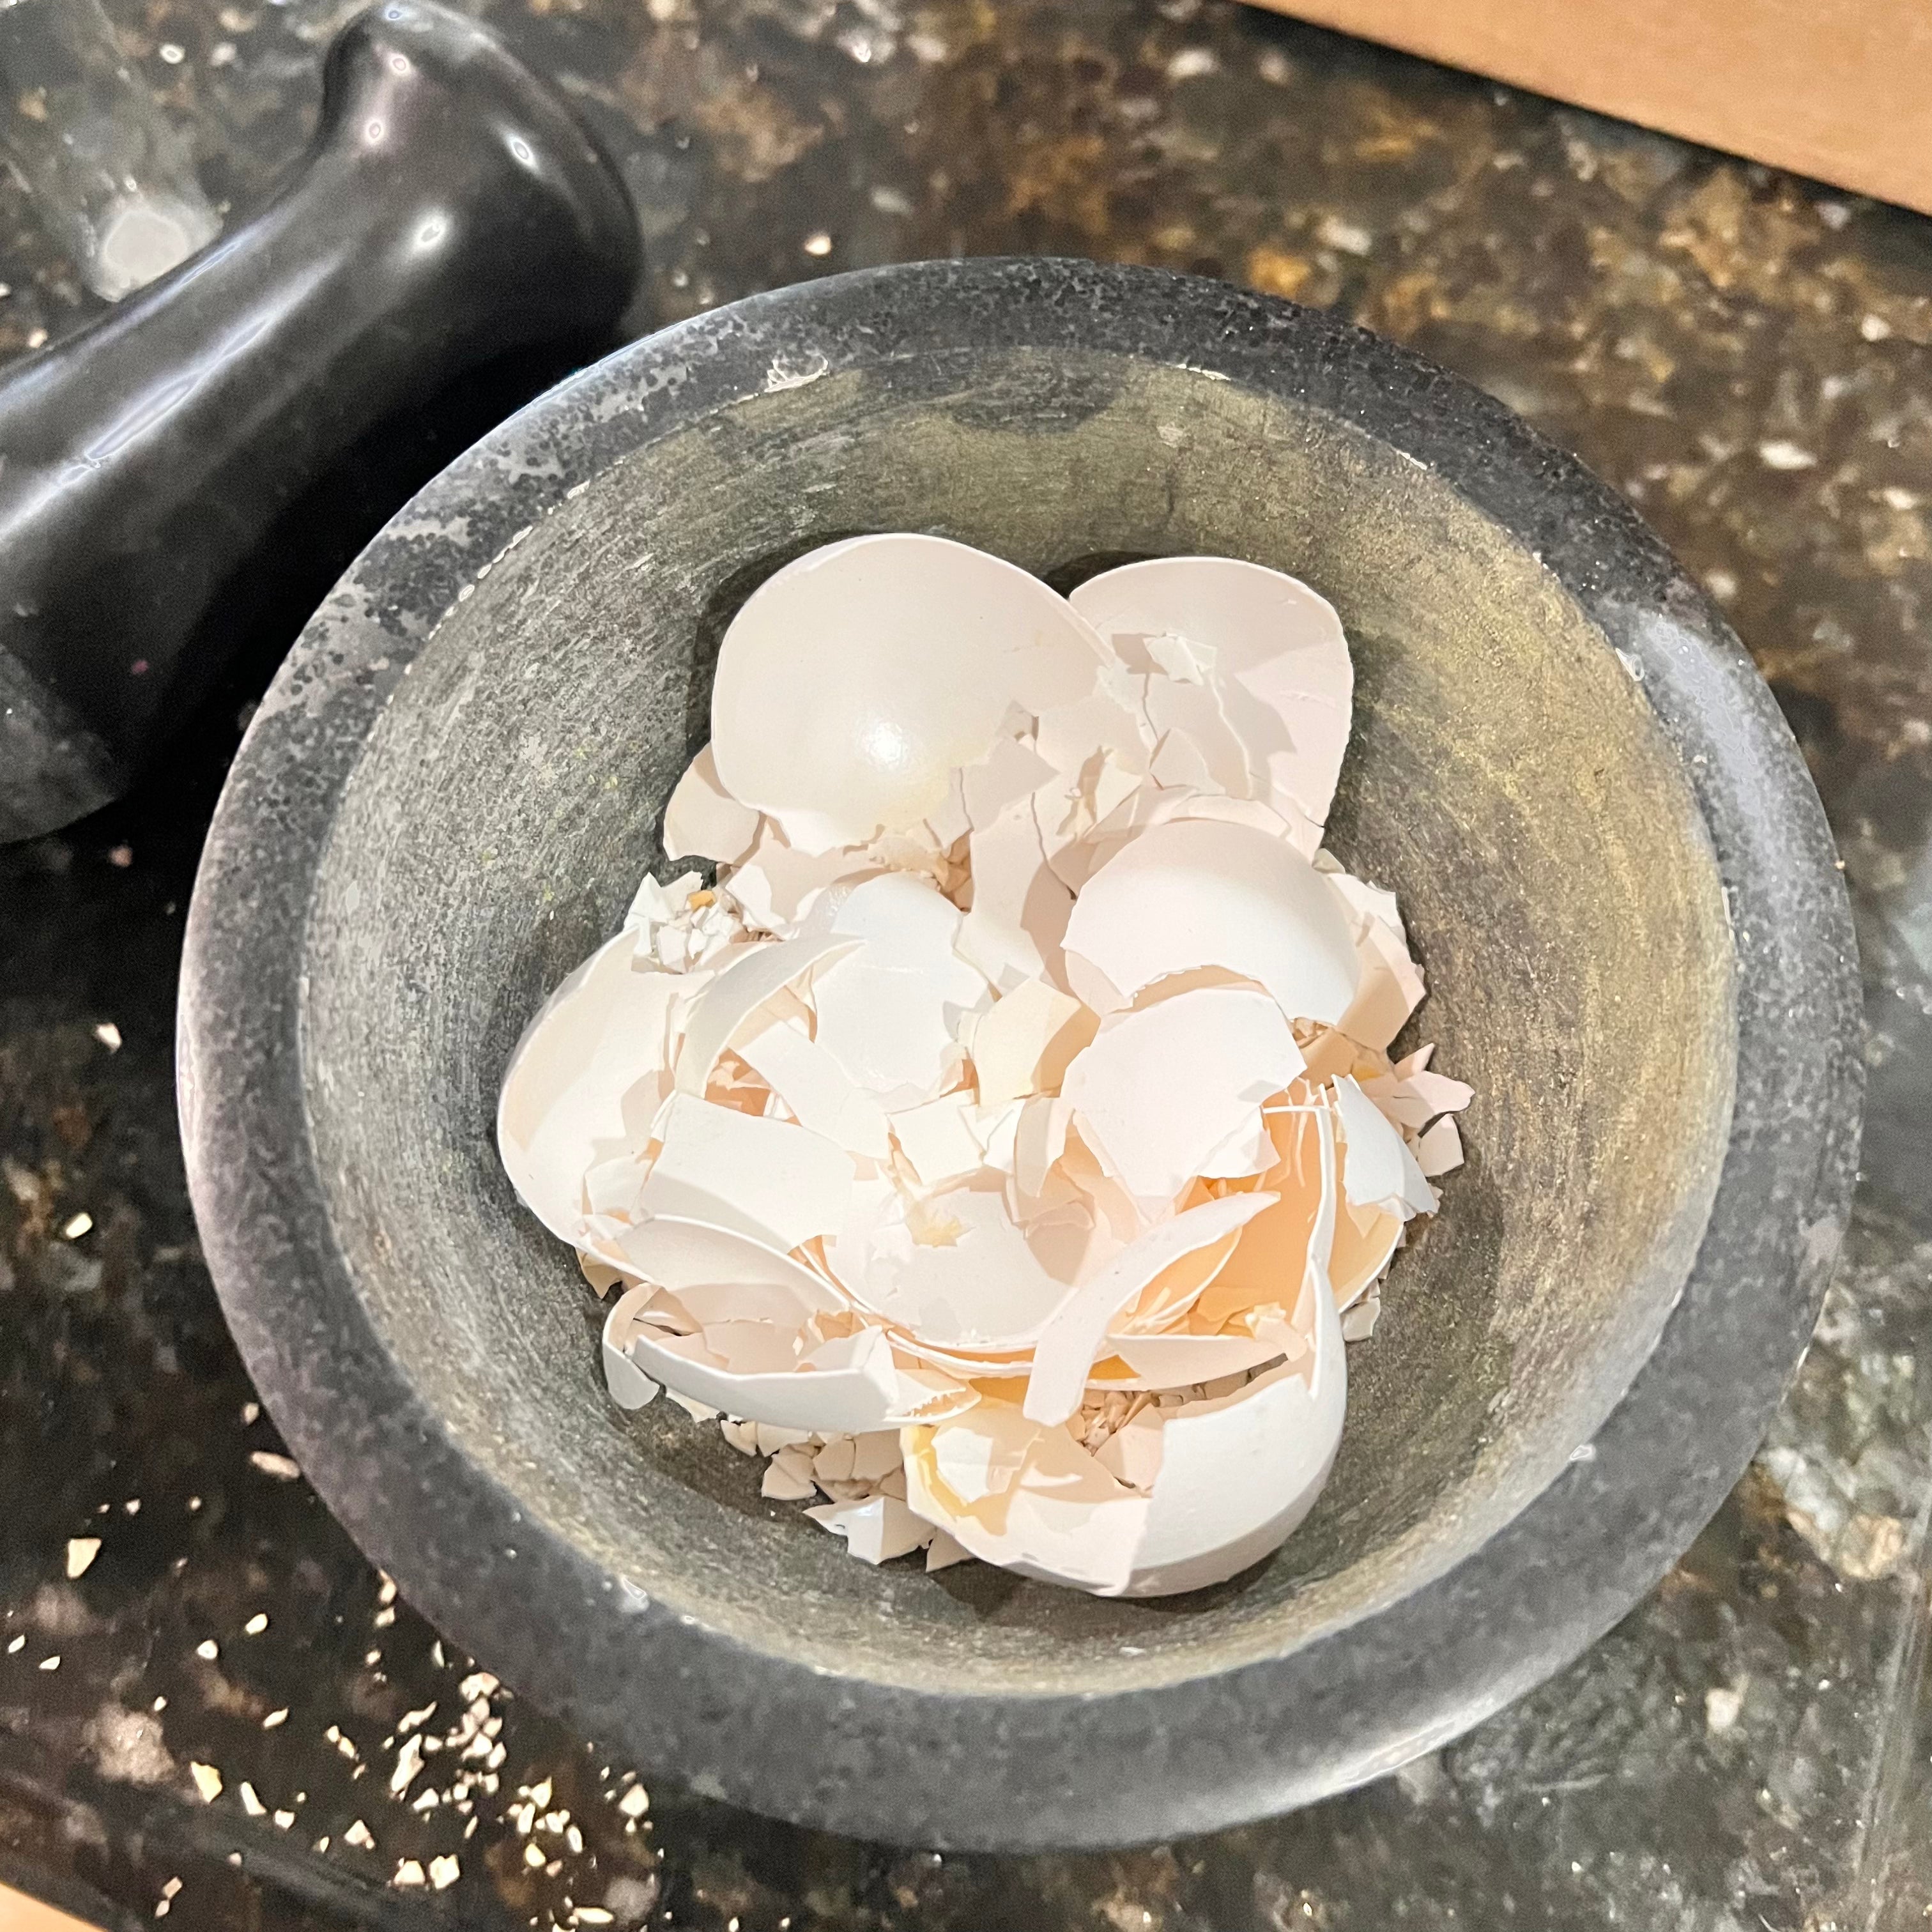 Cascarilla - Egg Shell powder